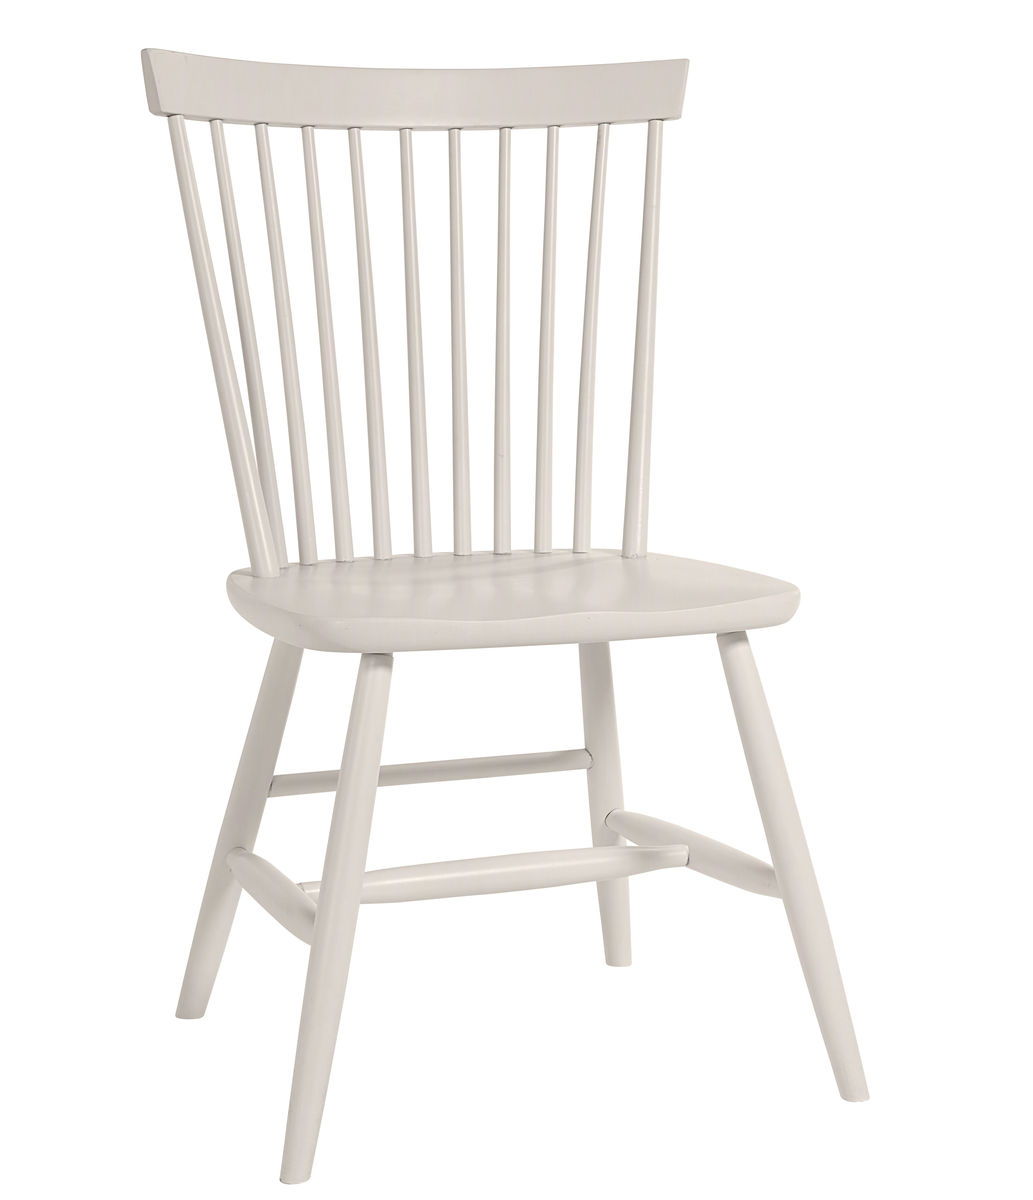 Bungalow - Chair - Lattice (Soft White)